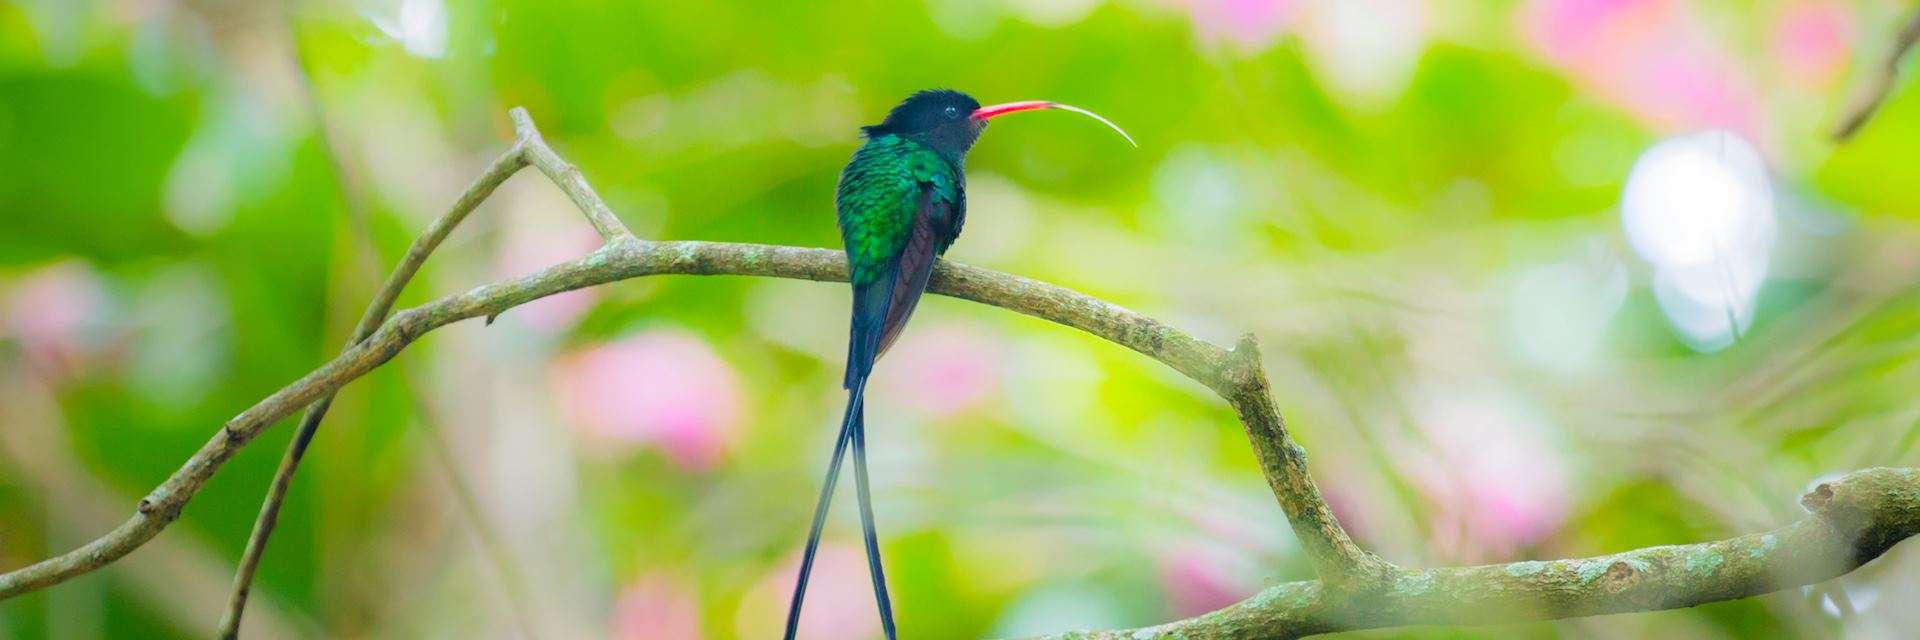 Hummingbird, Jamaica